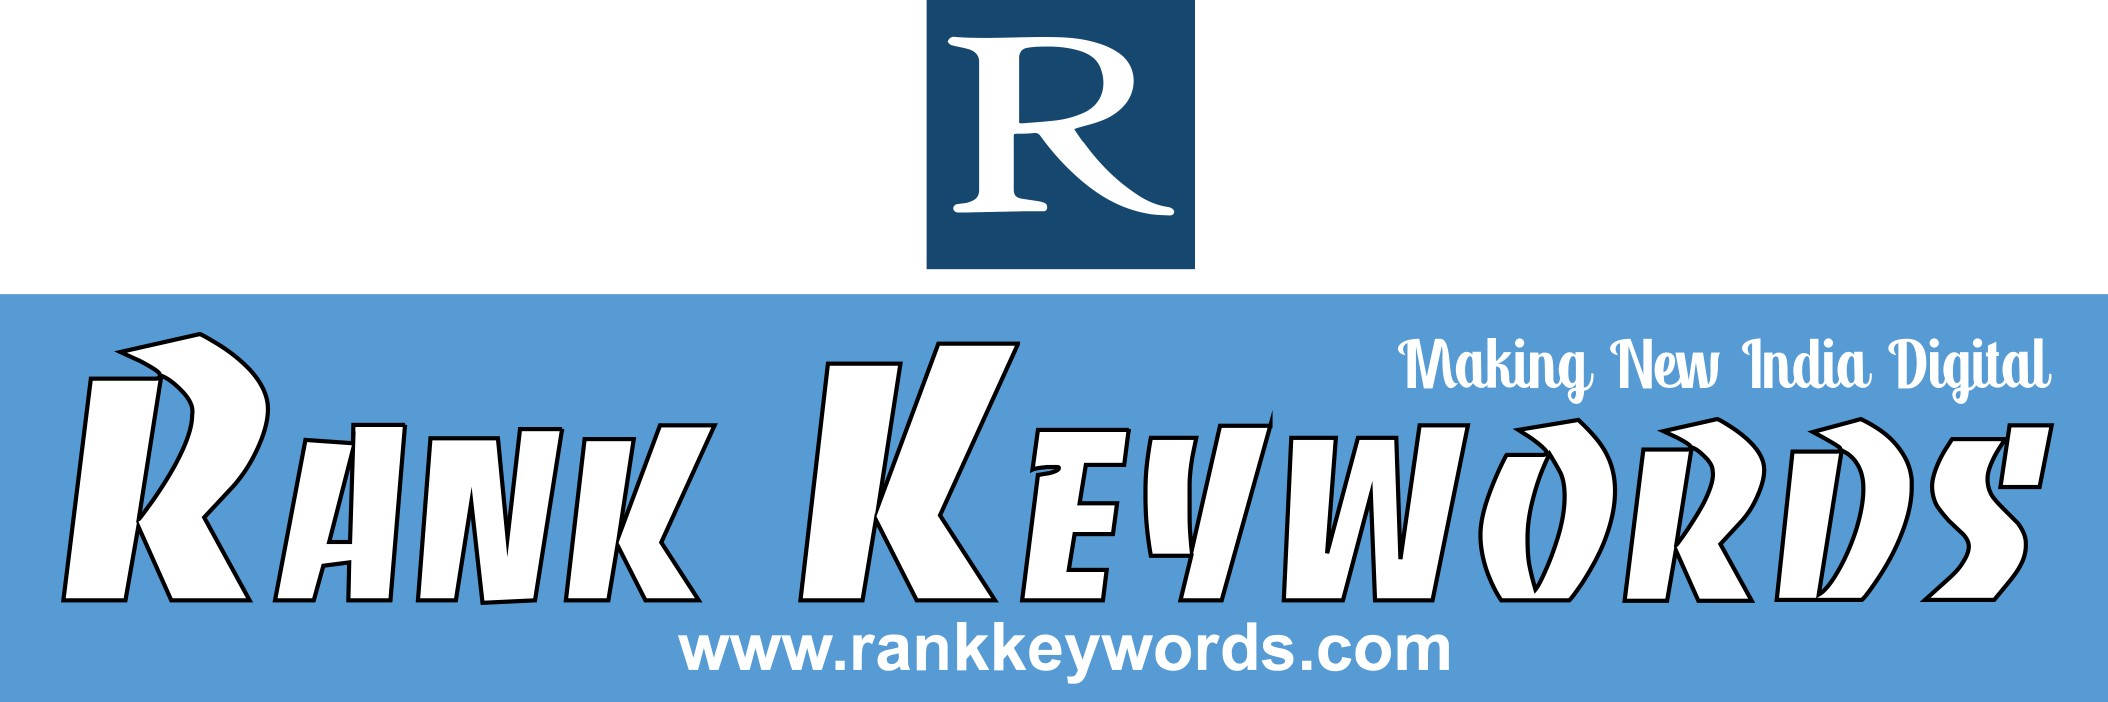 Rank keywords logo